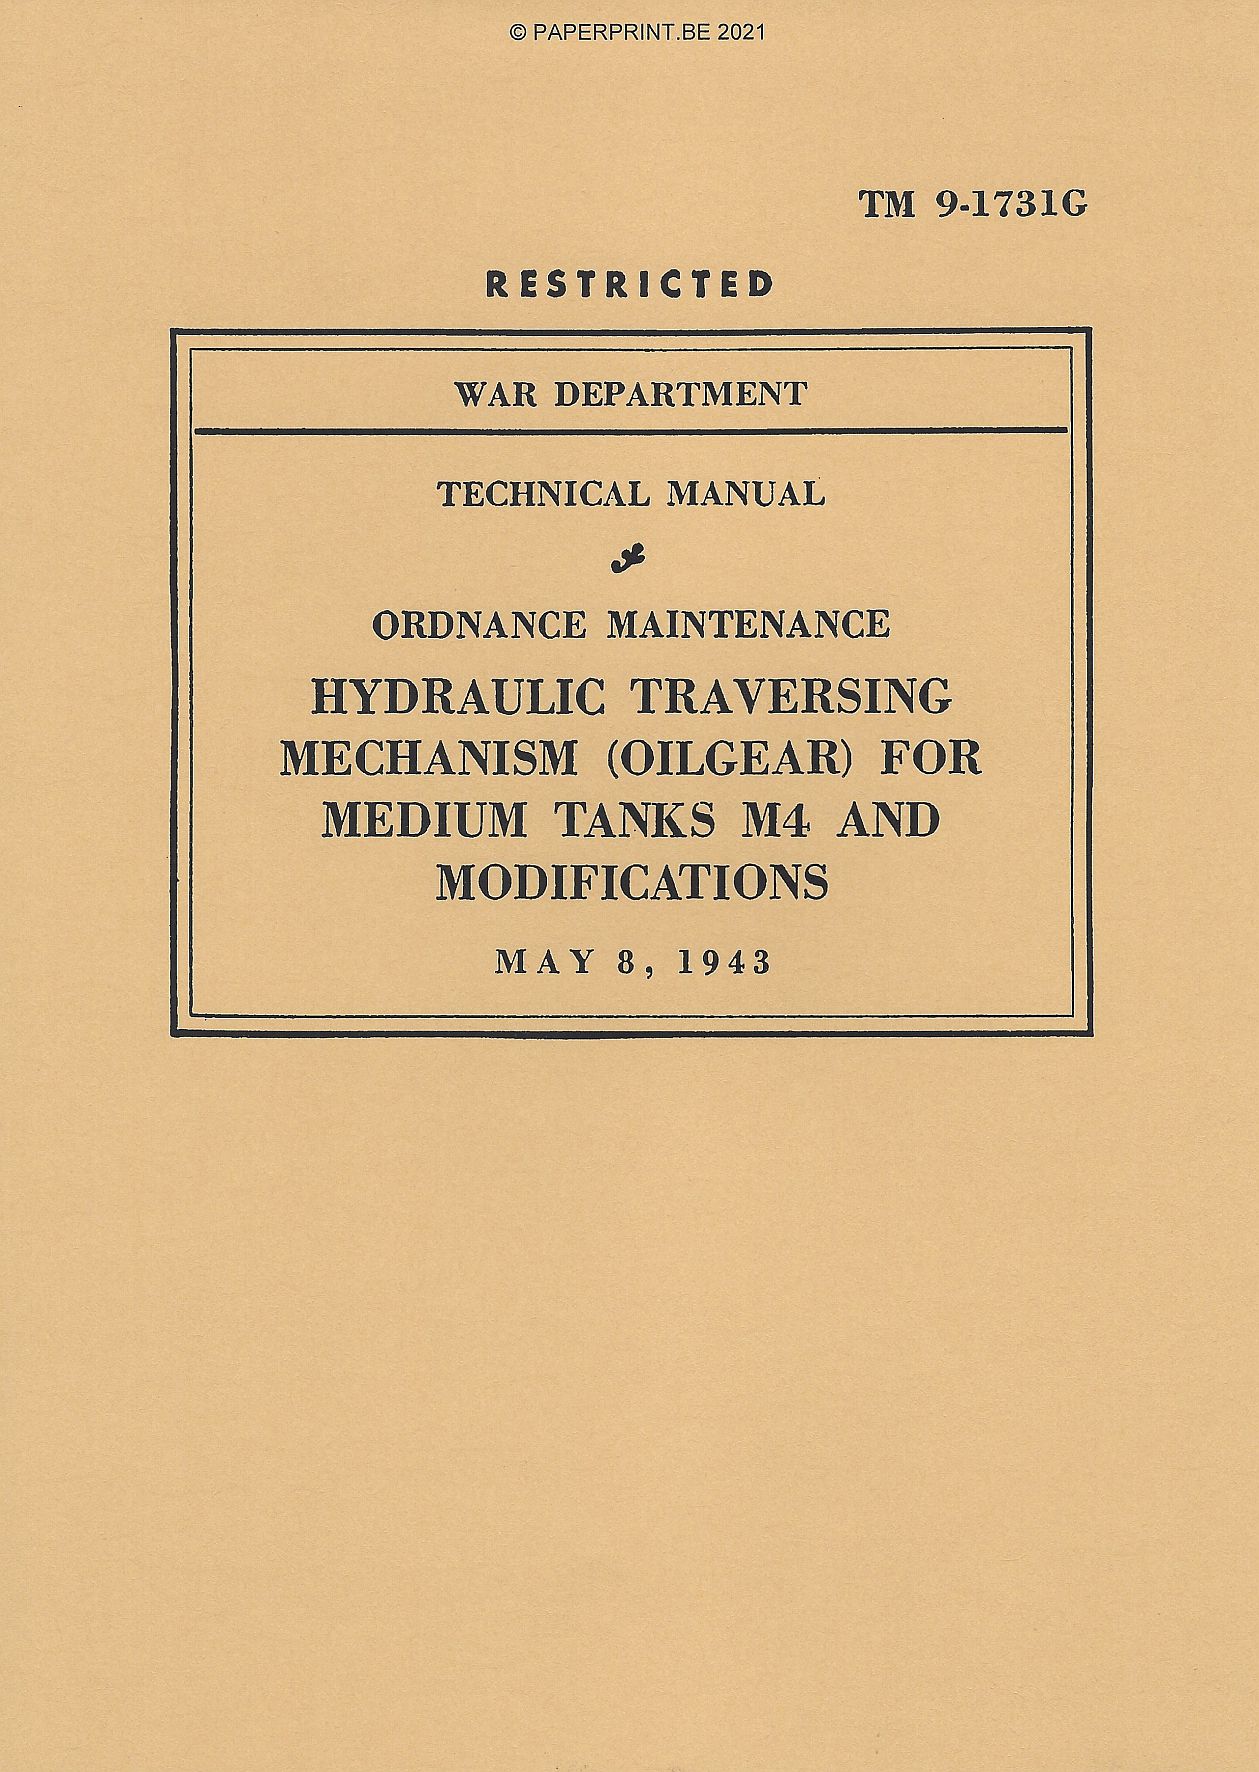 TM 9-1731G US HYDRAULIC TRAVERSING MECHANISM (OILGEAR) FOR MEDIUM TANKS M4 AND MODIFICATIONS